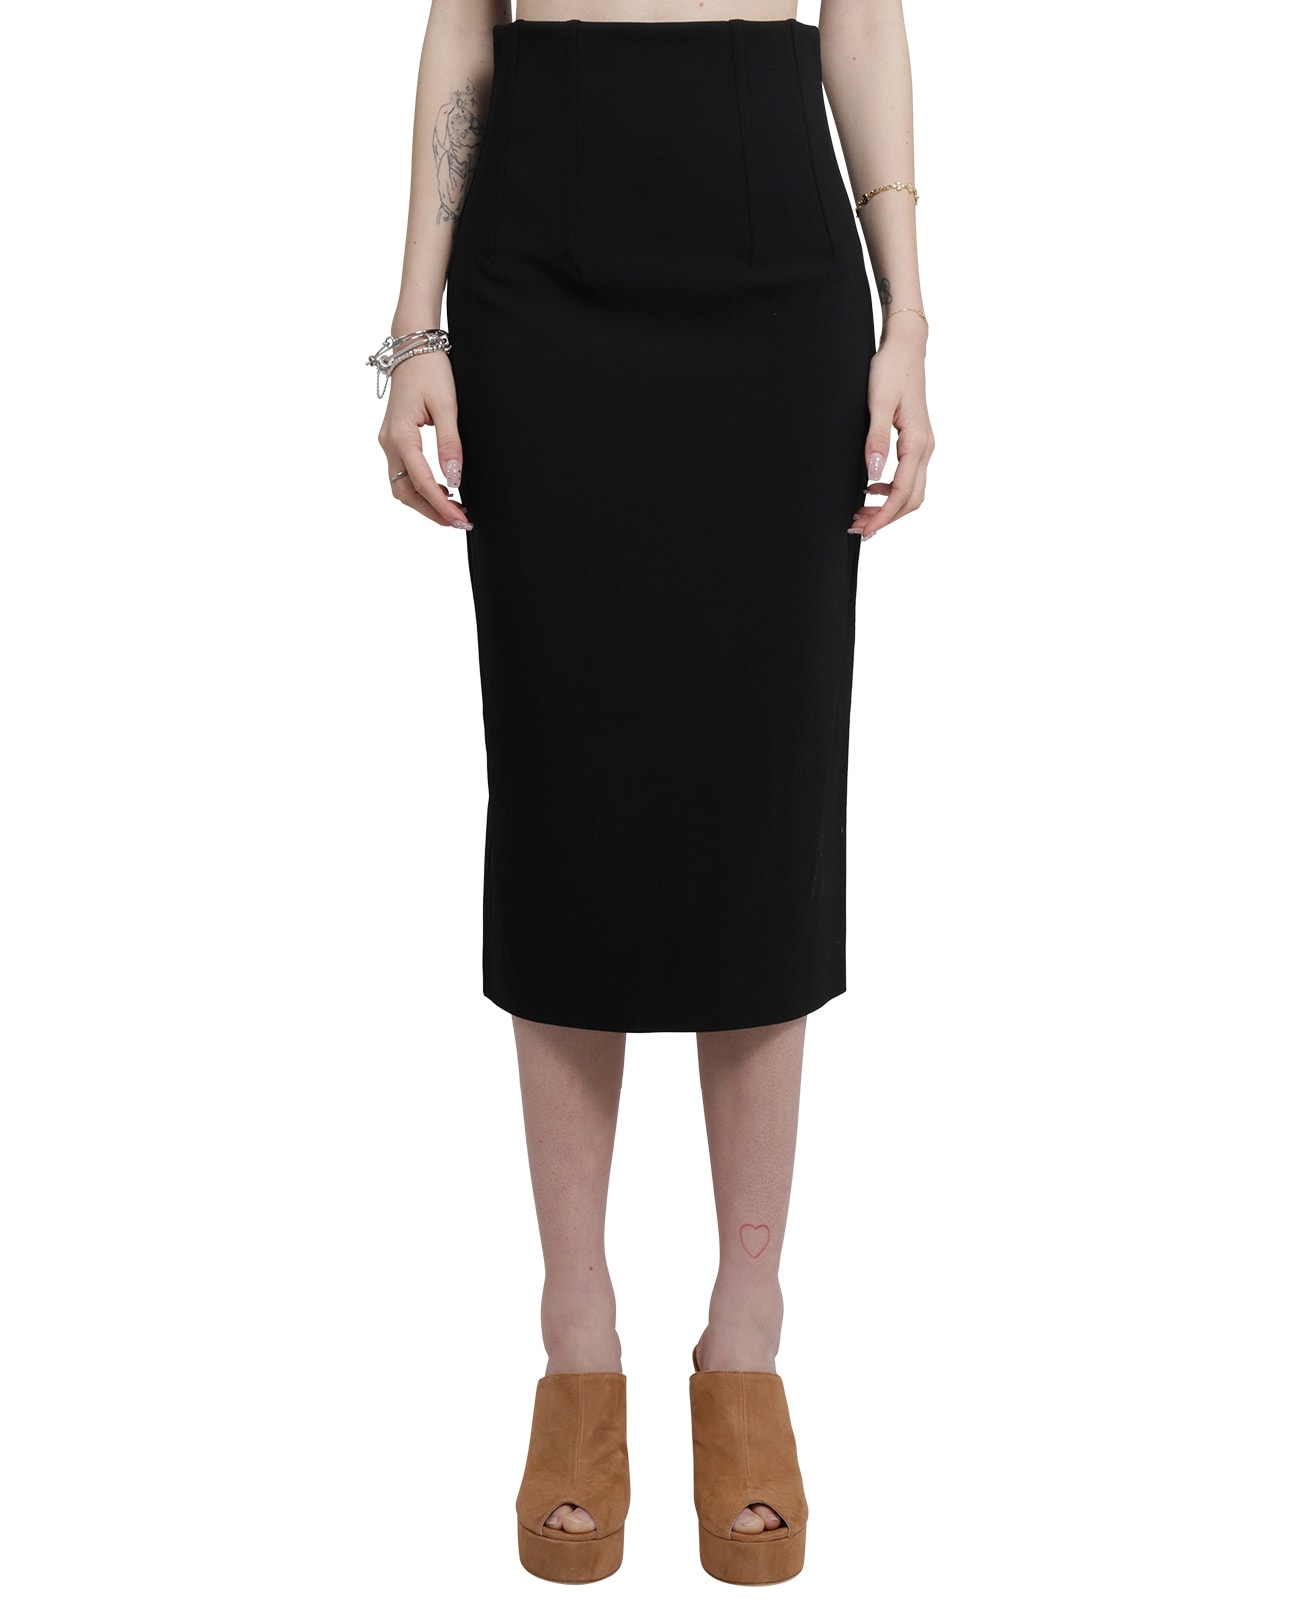 Michael Kors Black Pencil Skirt